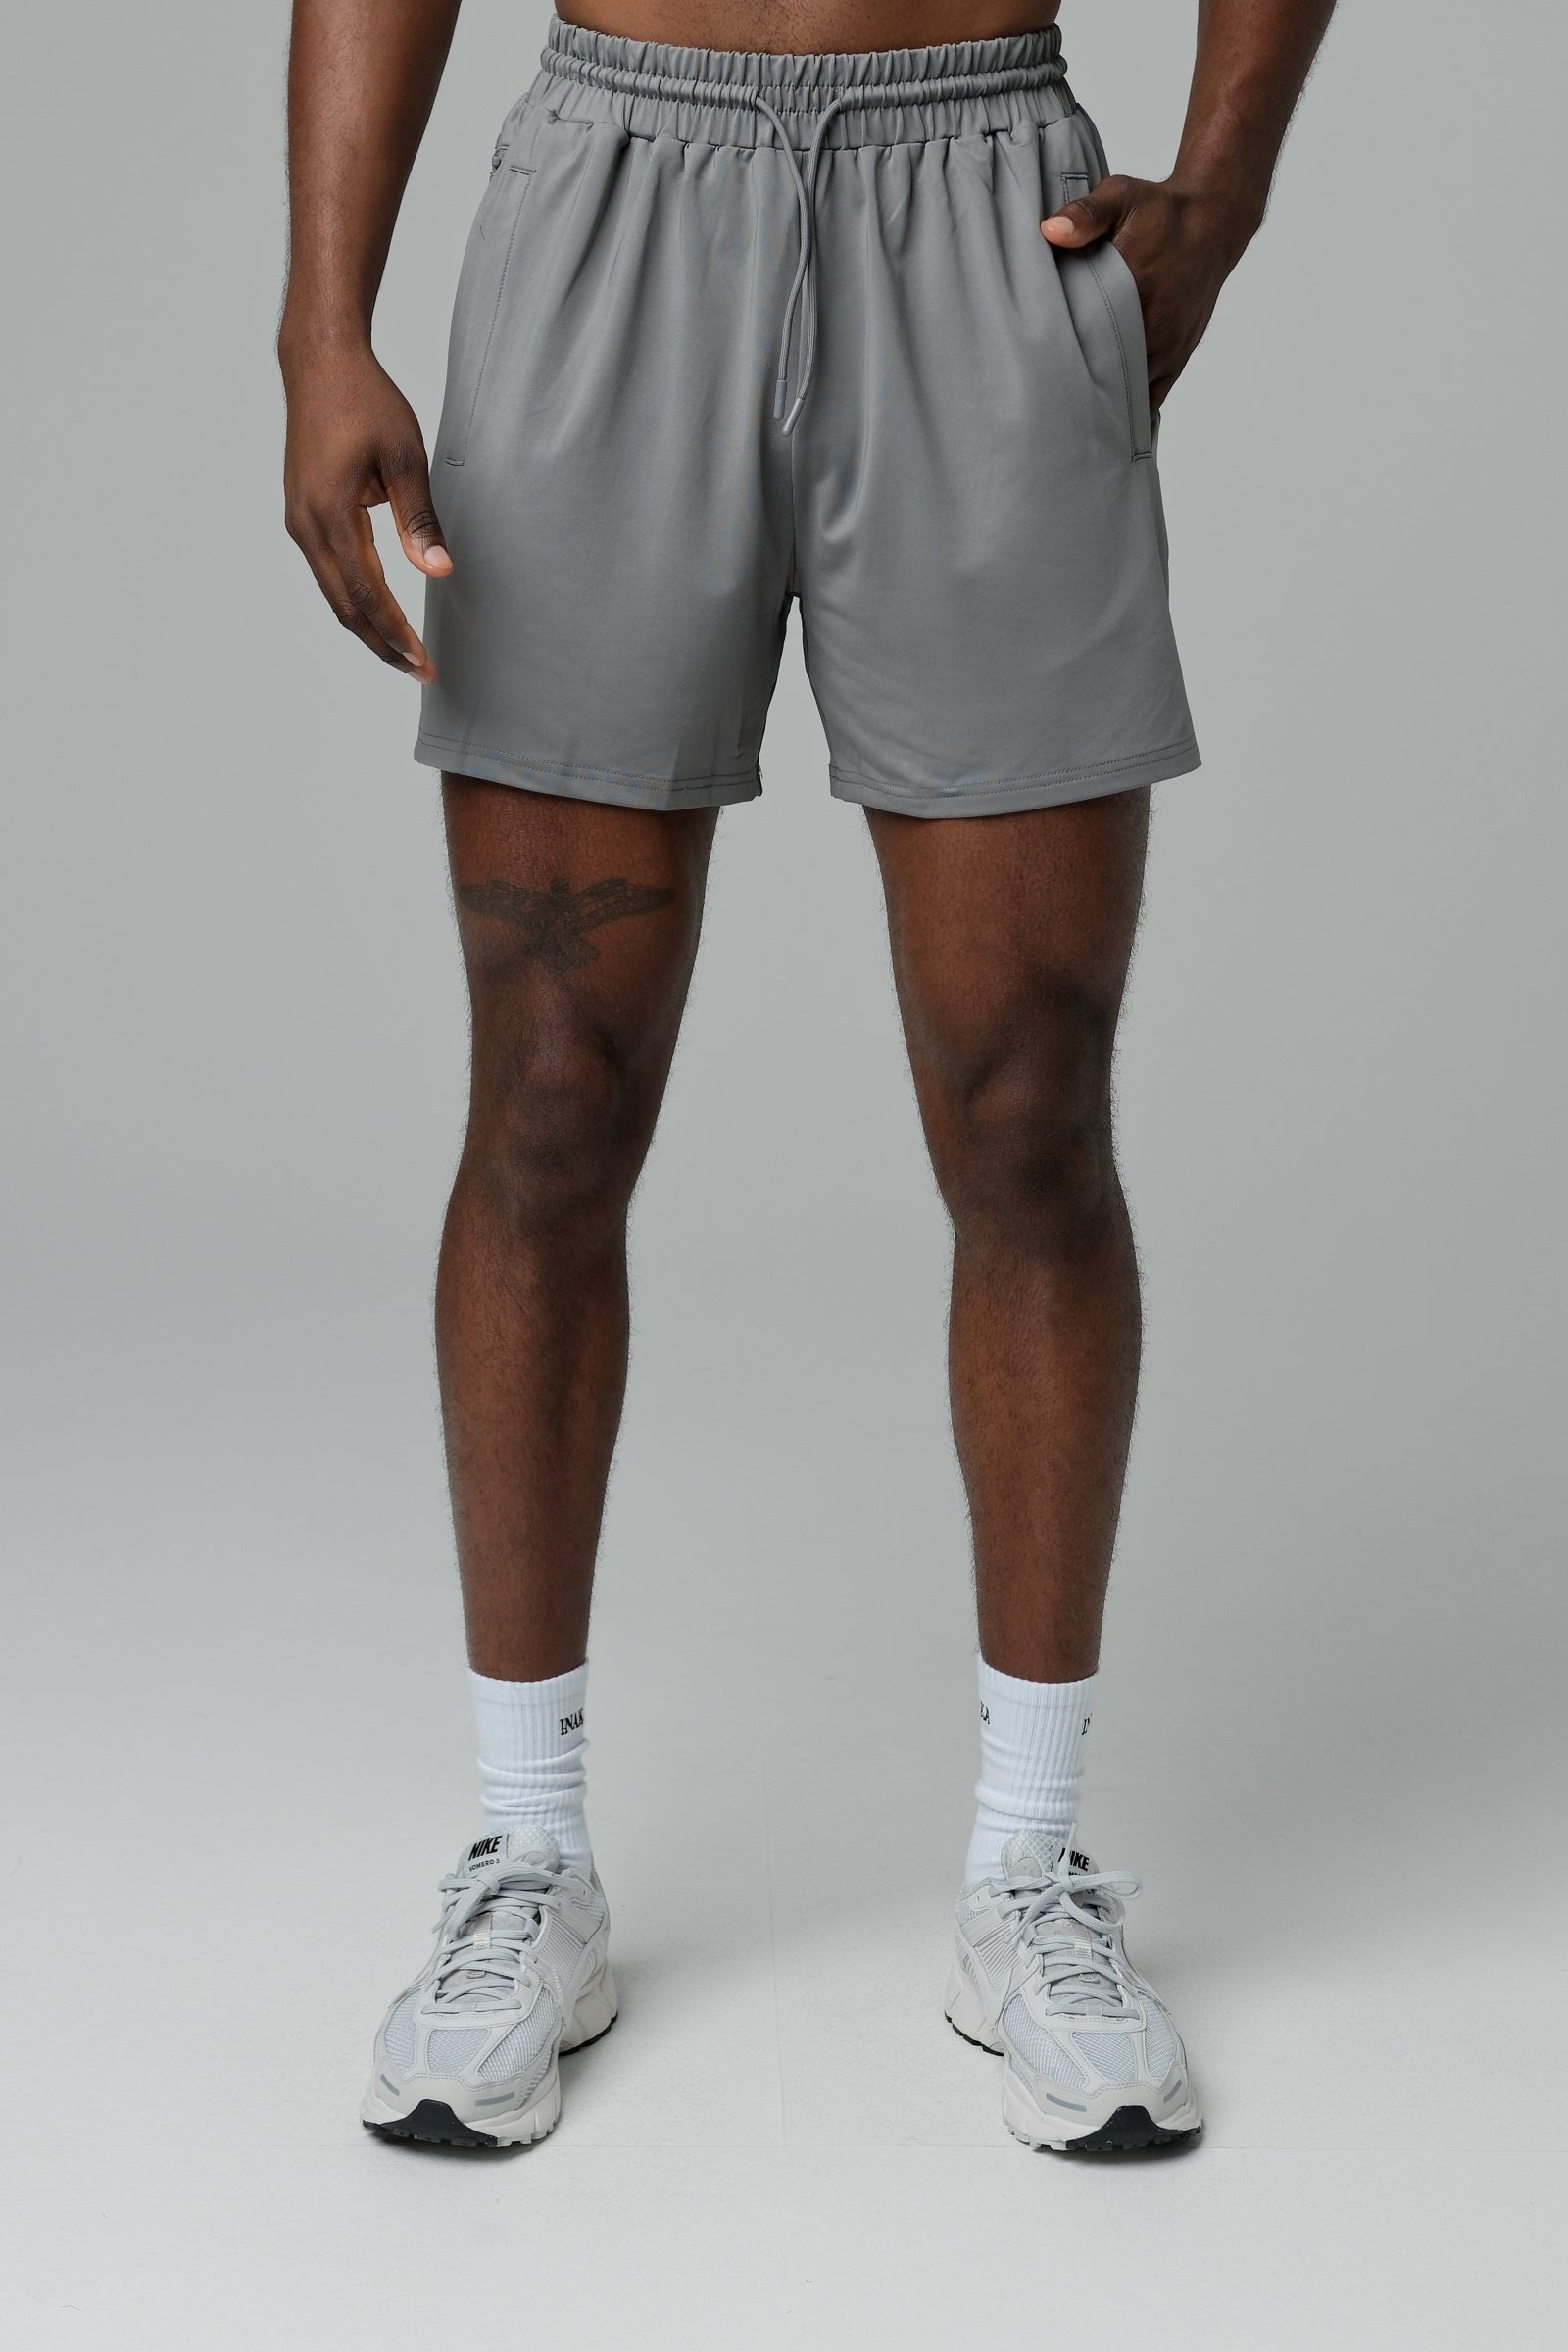 FreeForm Shorts Linerless - Steel Grey